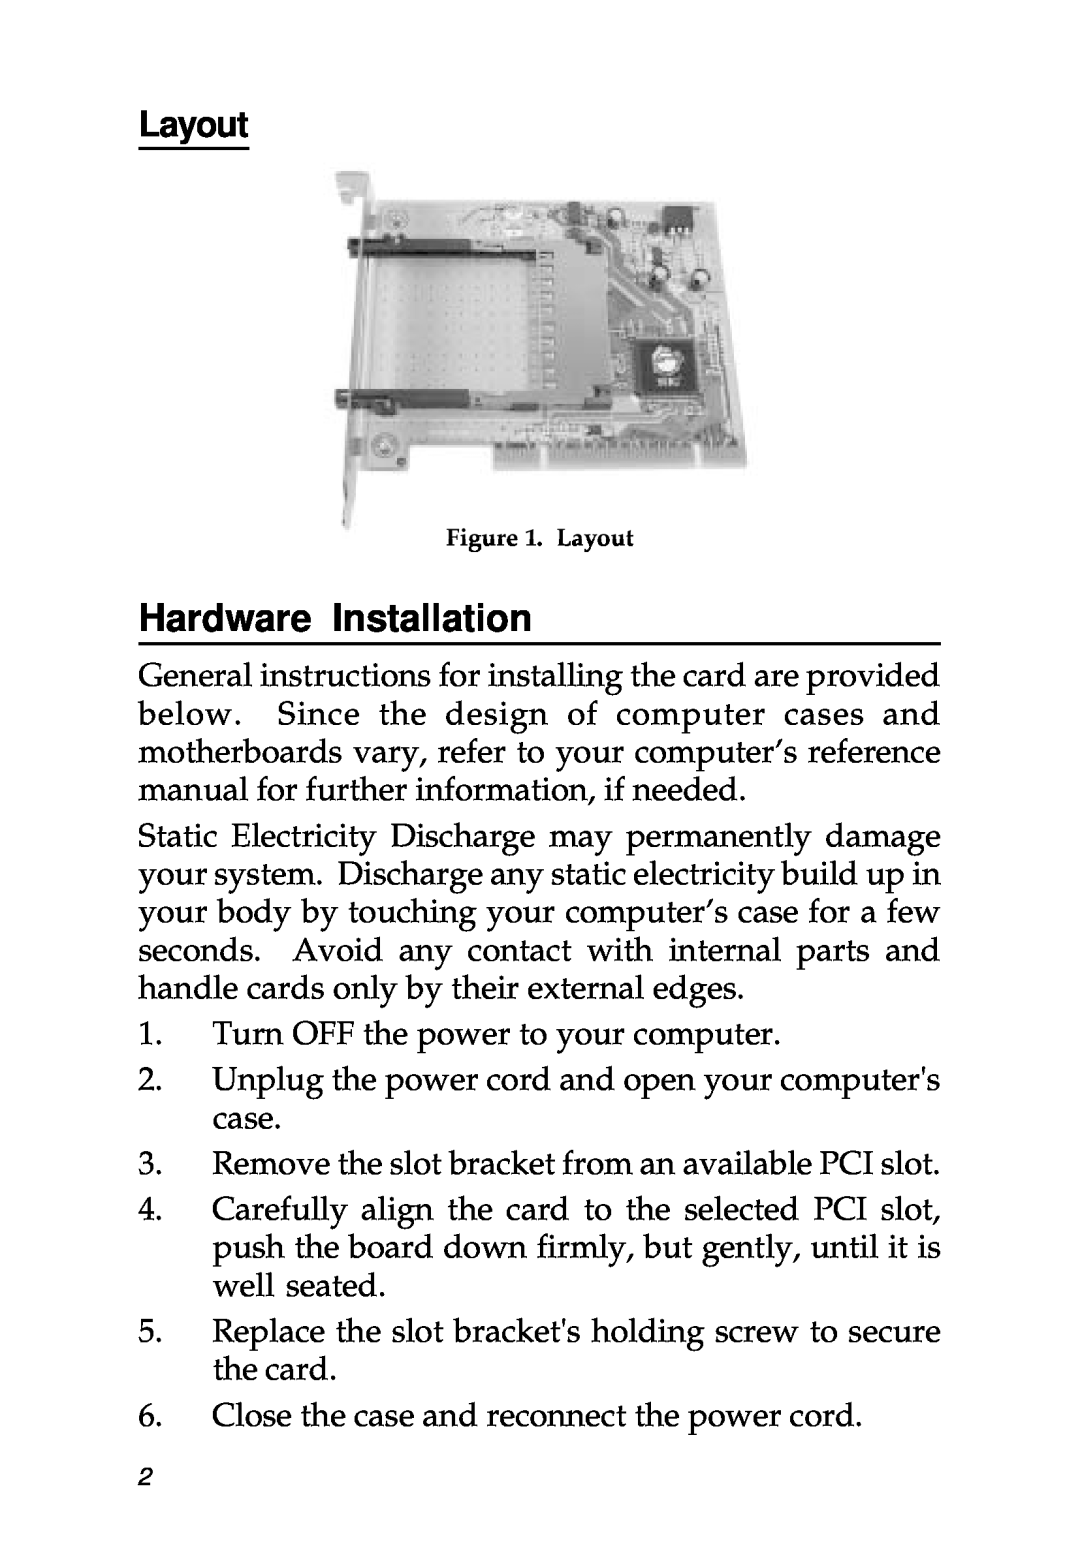 SIIG Network Card manual Hardware Installation, Layout 